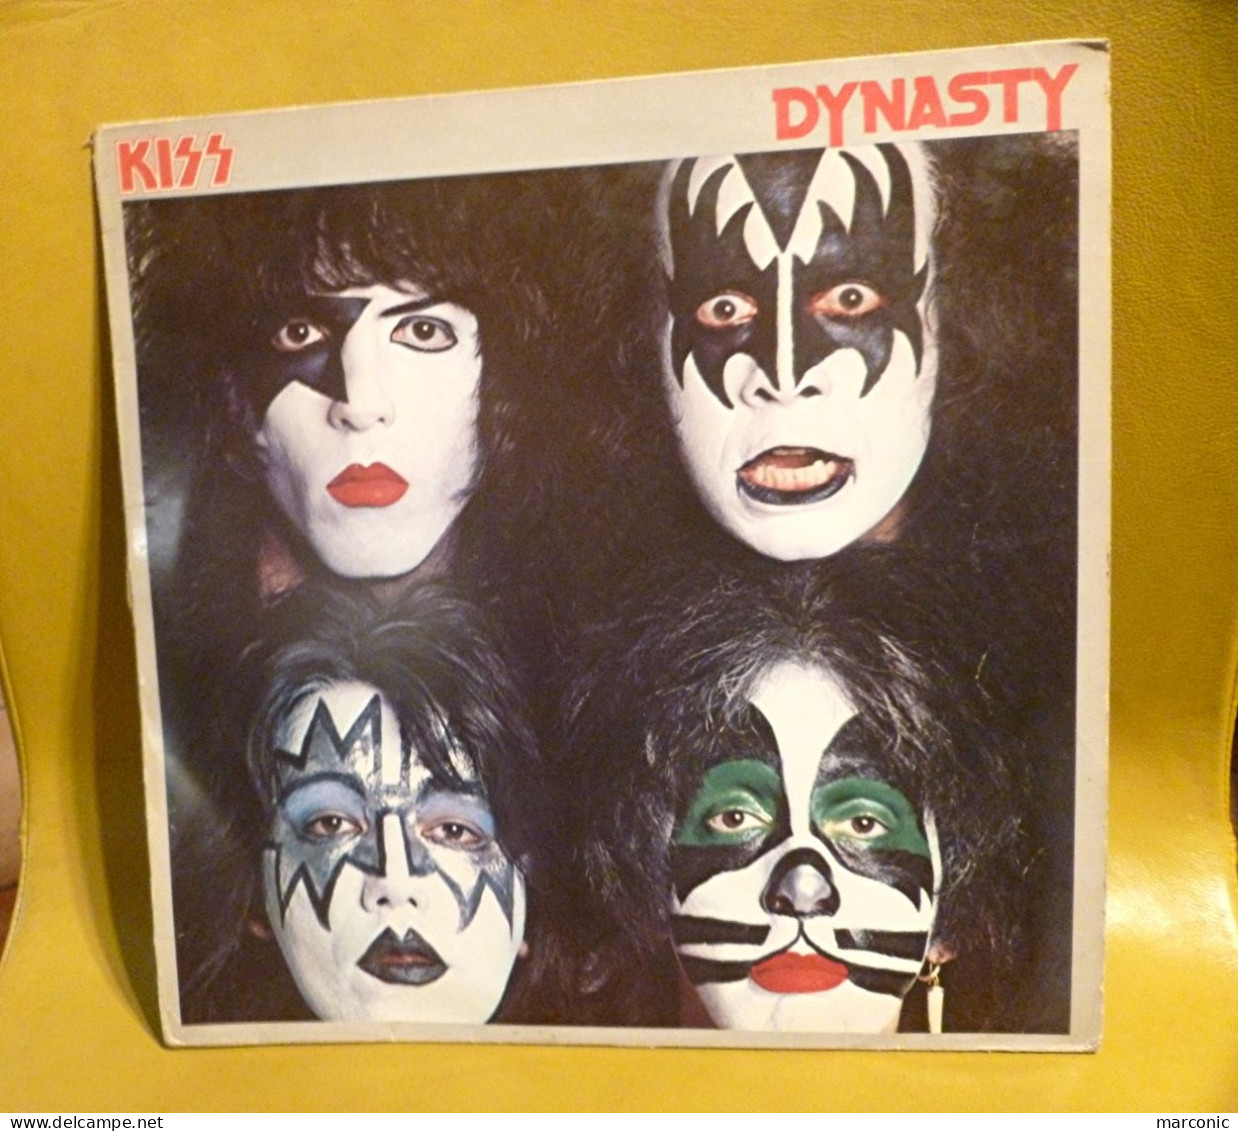 Vinyl - KISS DYNASTY - 1979 - 33 T - Andere - Engelstalig